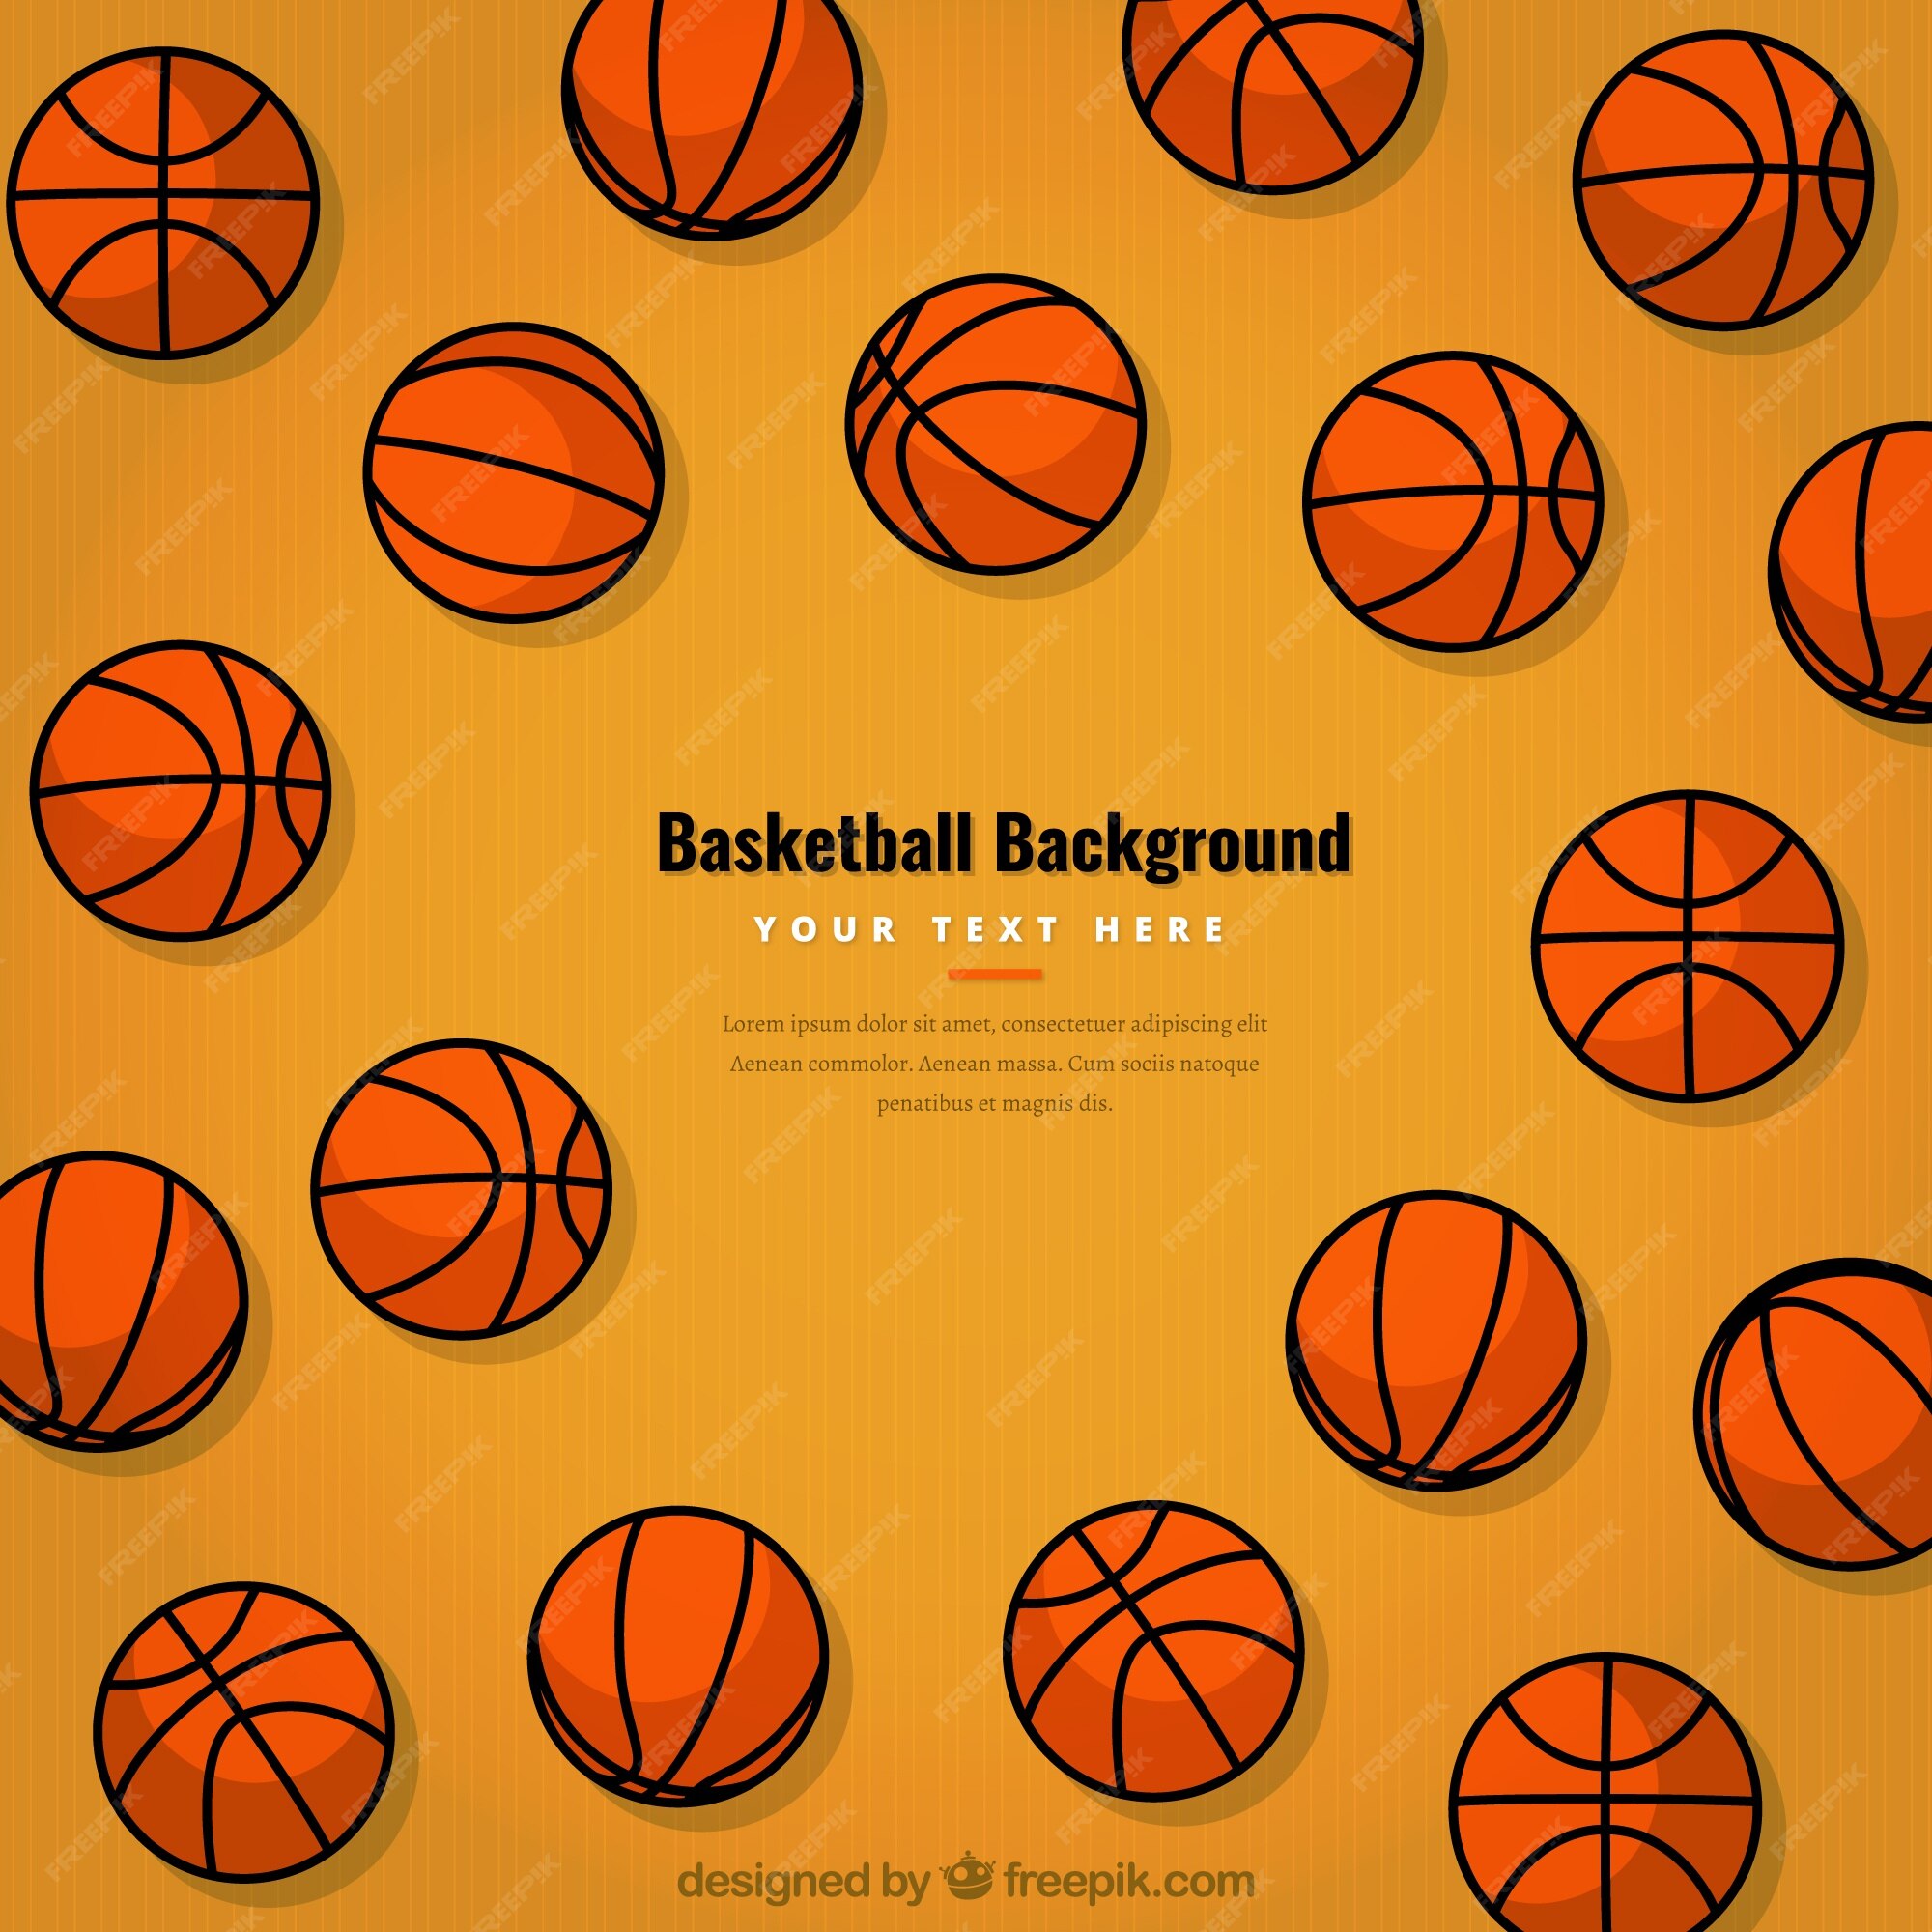 Basketball Outline Images - Free Download on Freepik